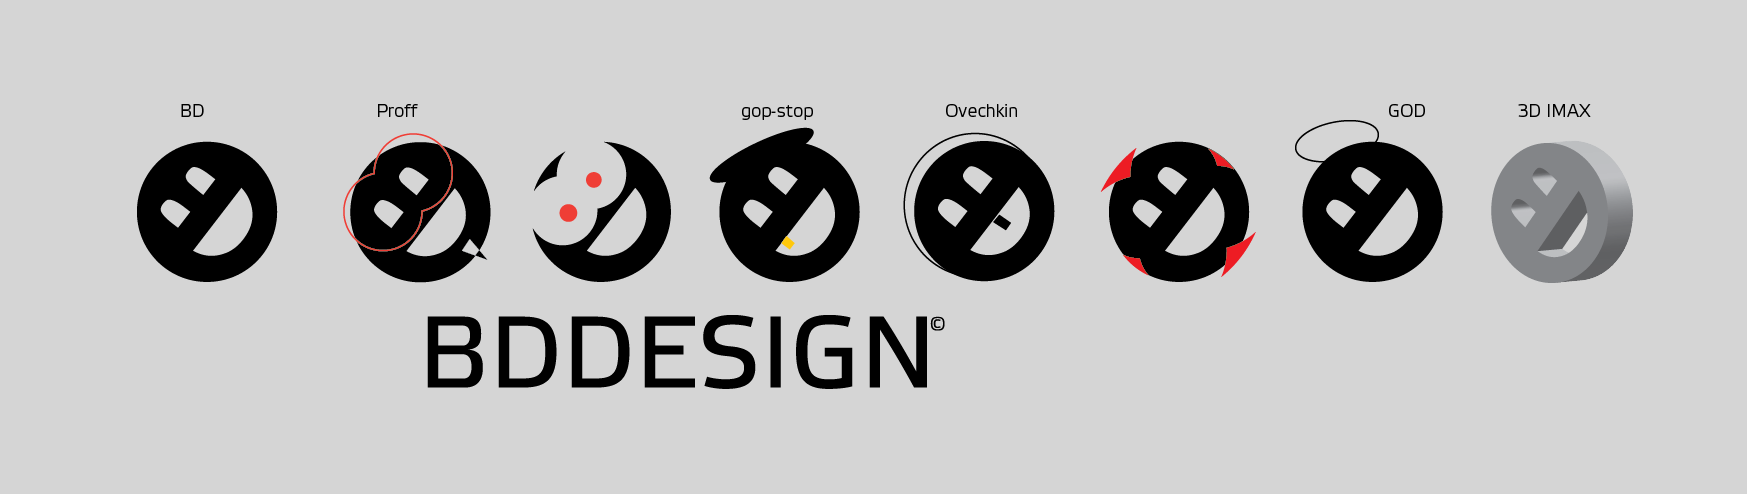 bd-design logo transform